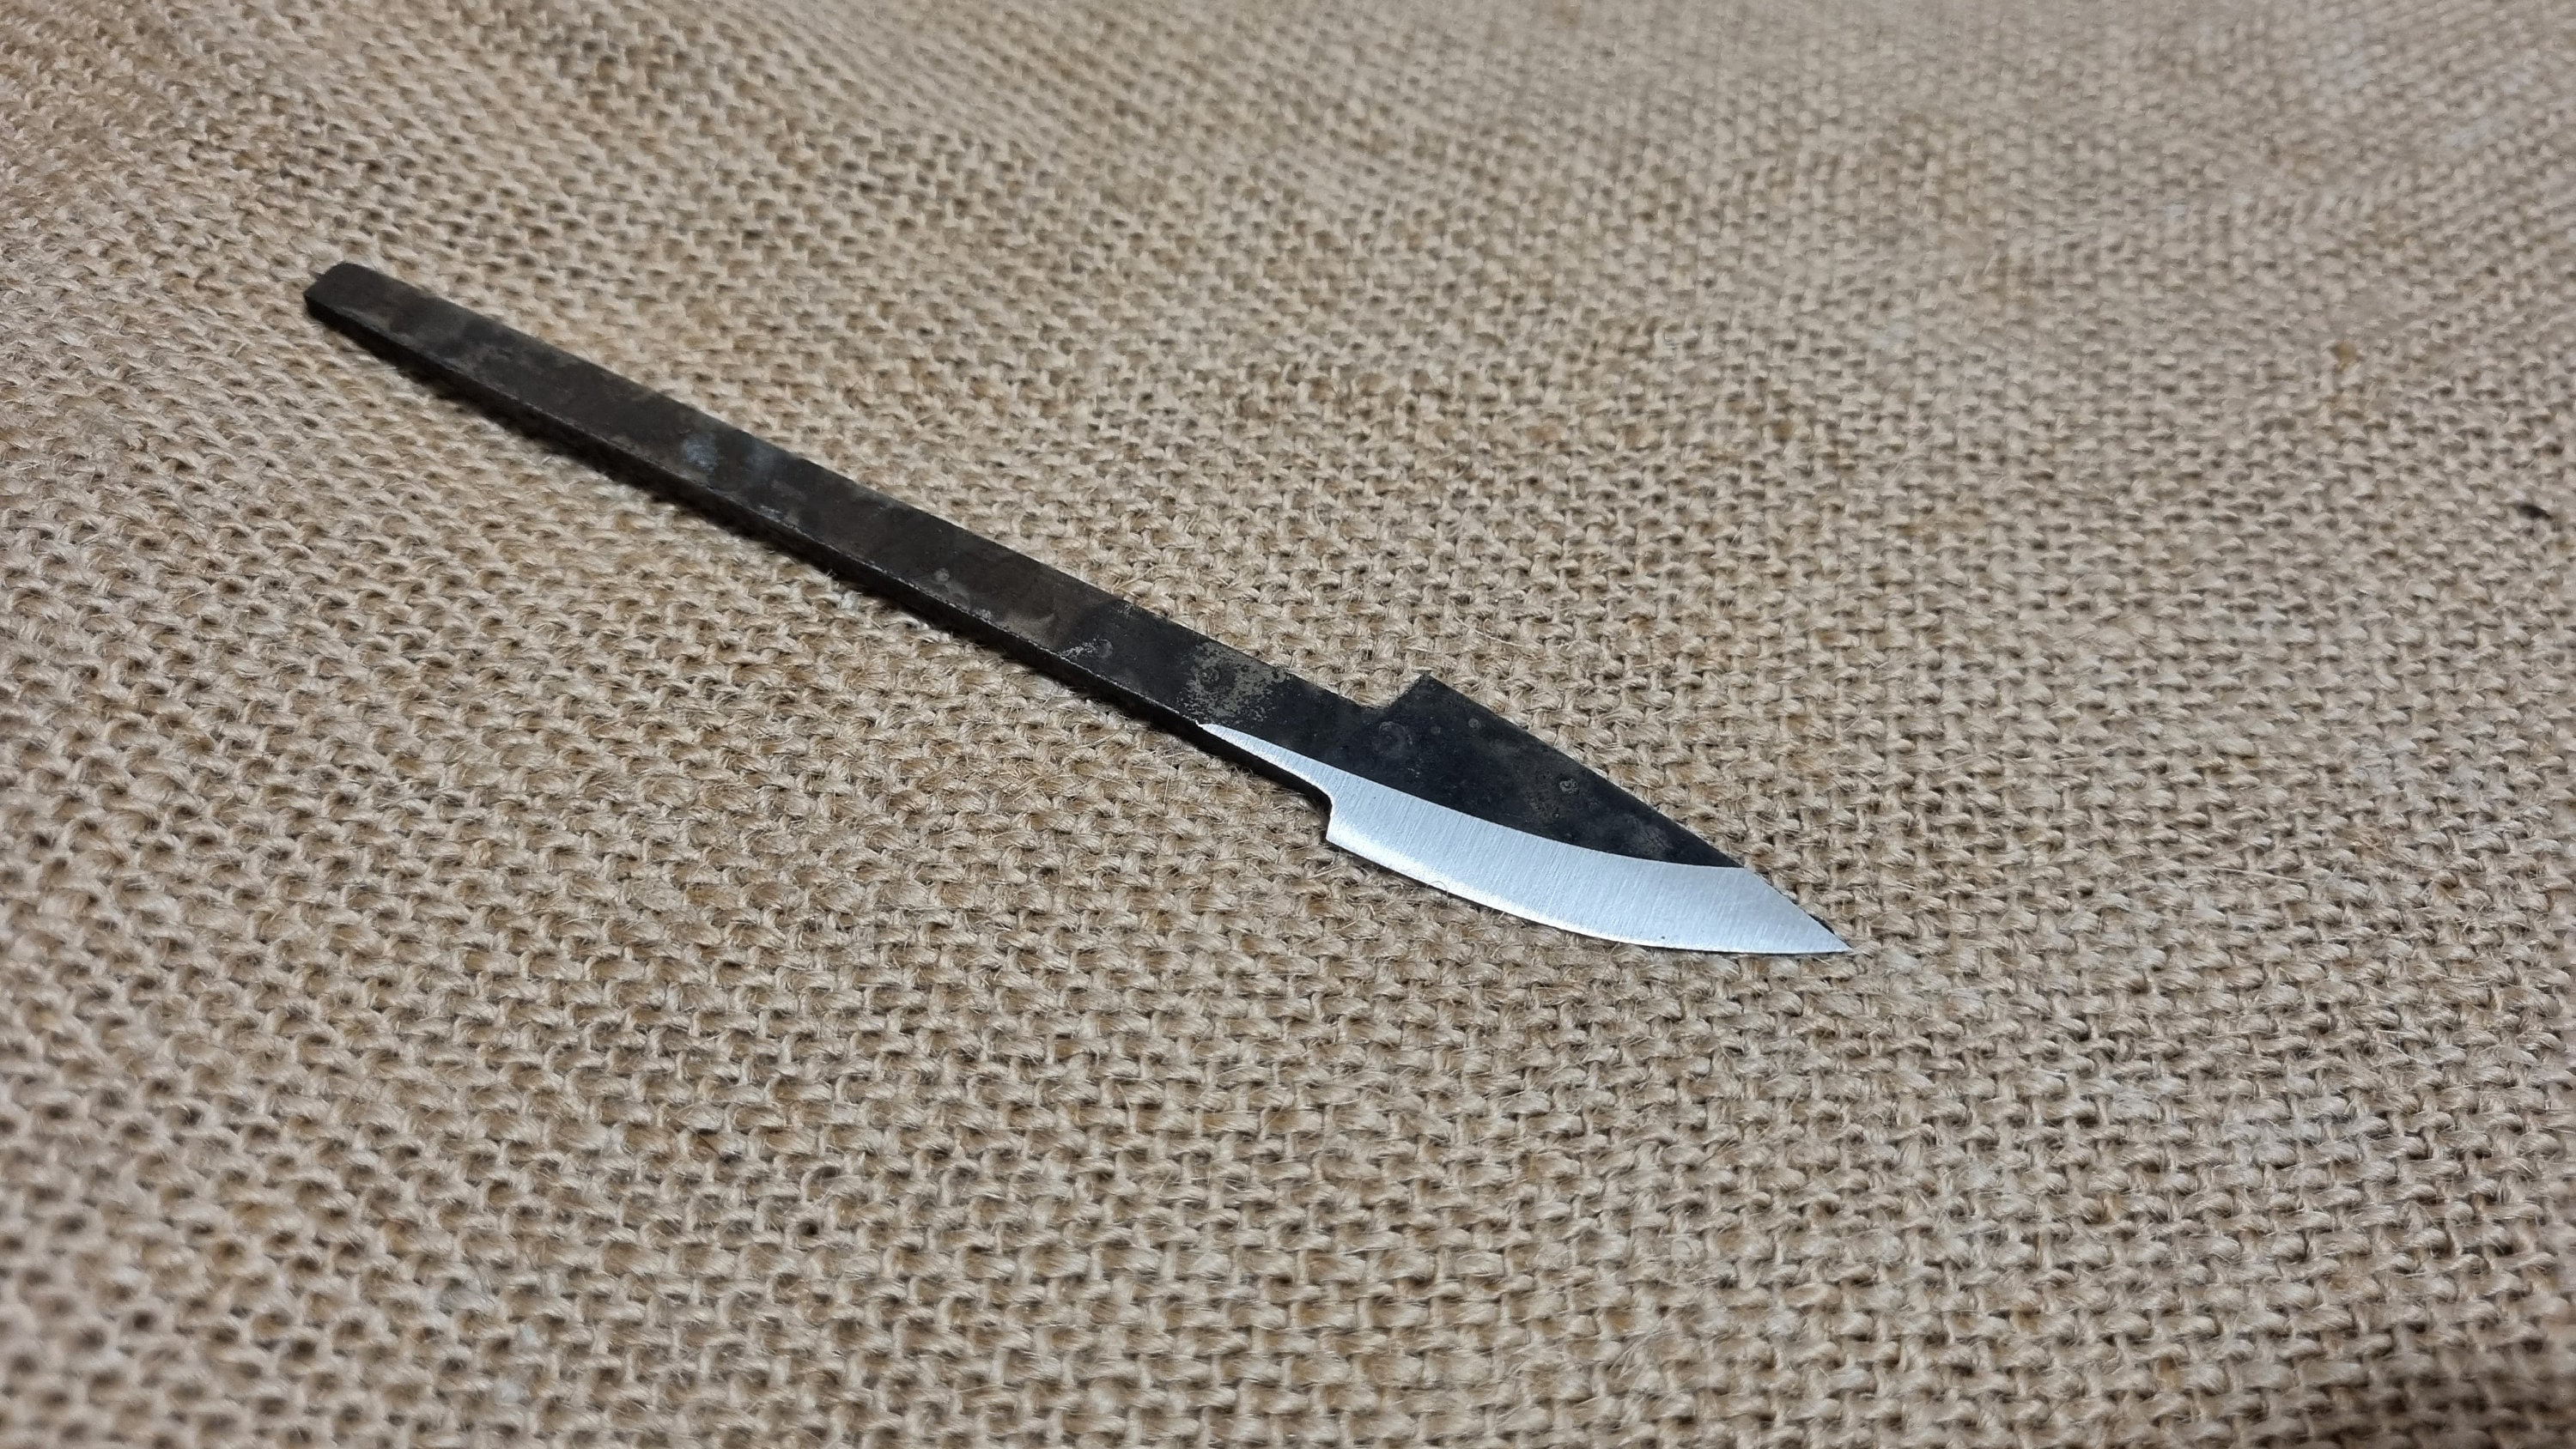 Scalpel Blades No: 11 Xacto Type Blades Very High Quality